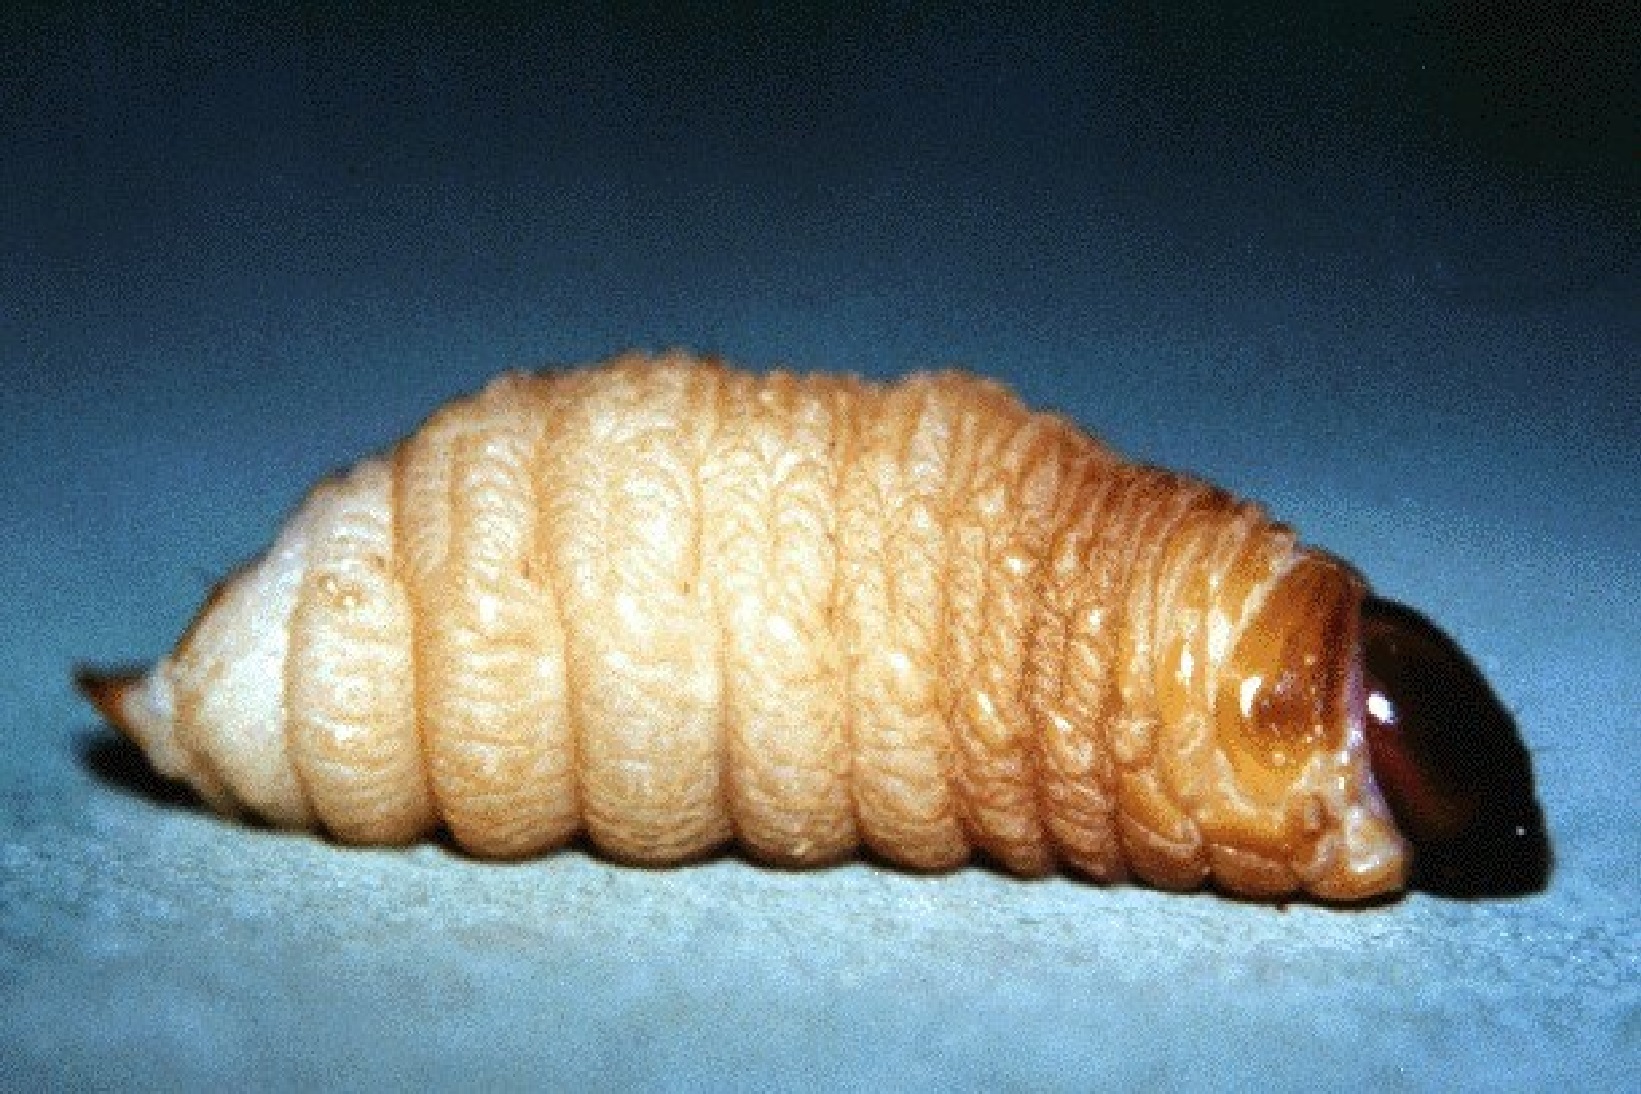 Close-up of the larva.